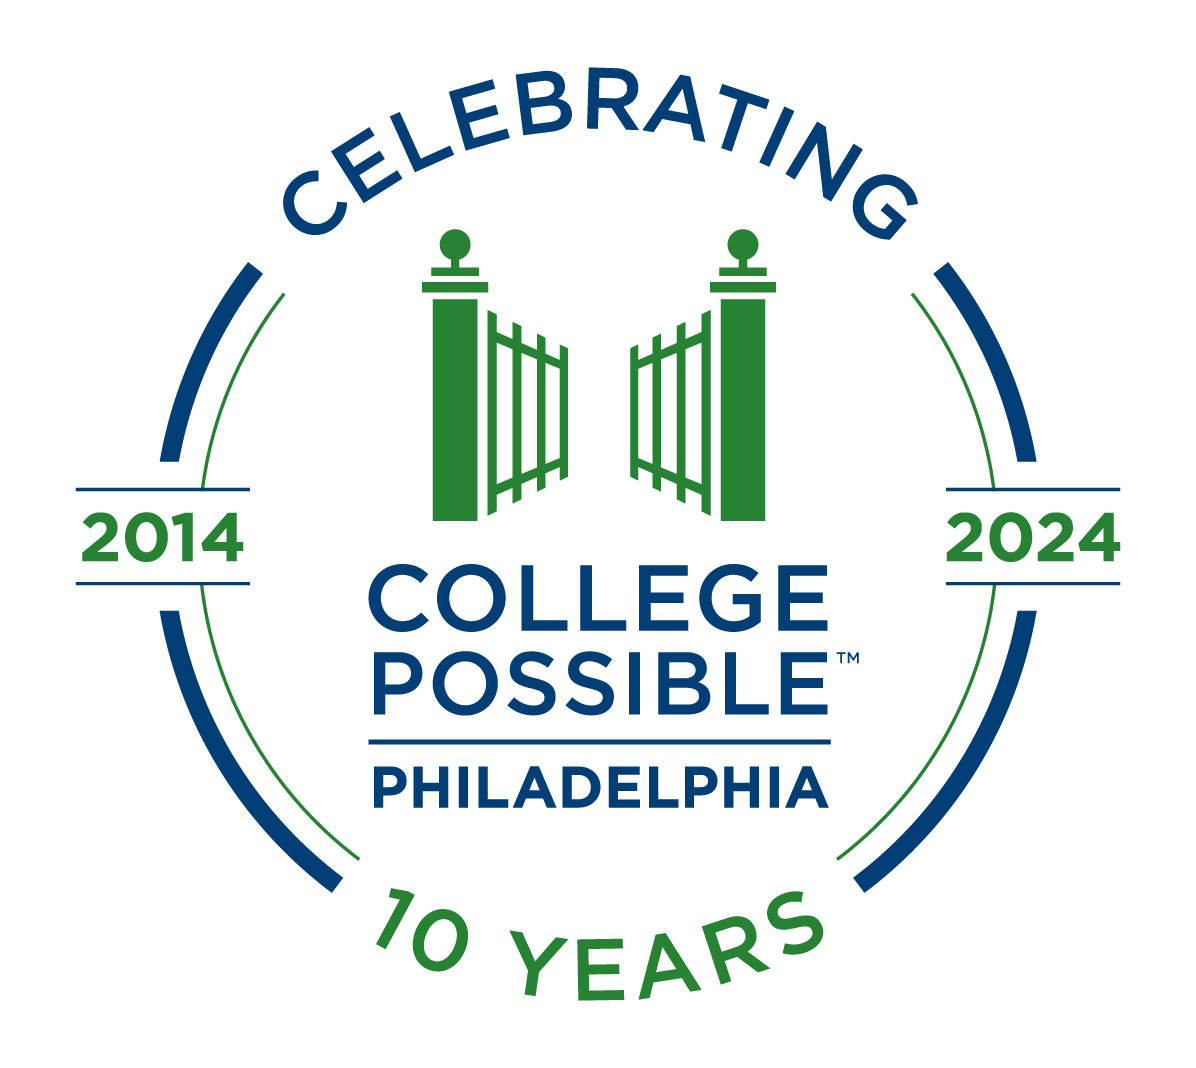 College Possible Philadelphia logo celebrating 10 years between 2014-2024